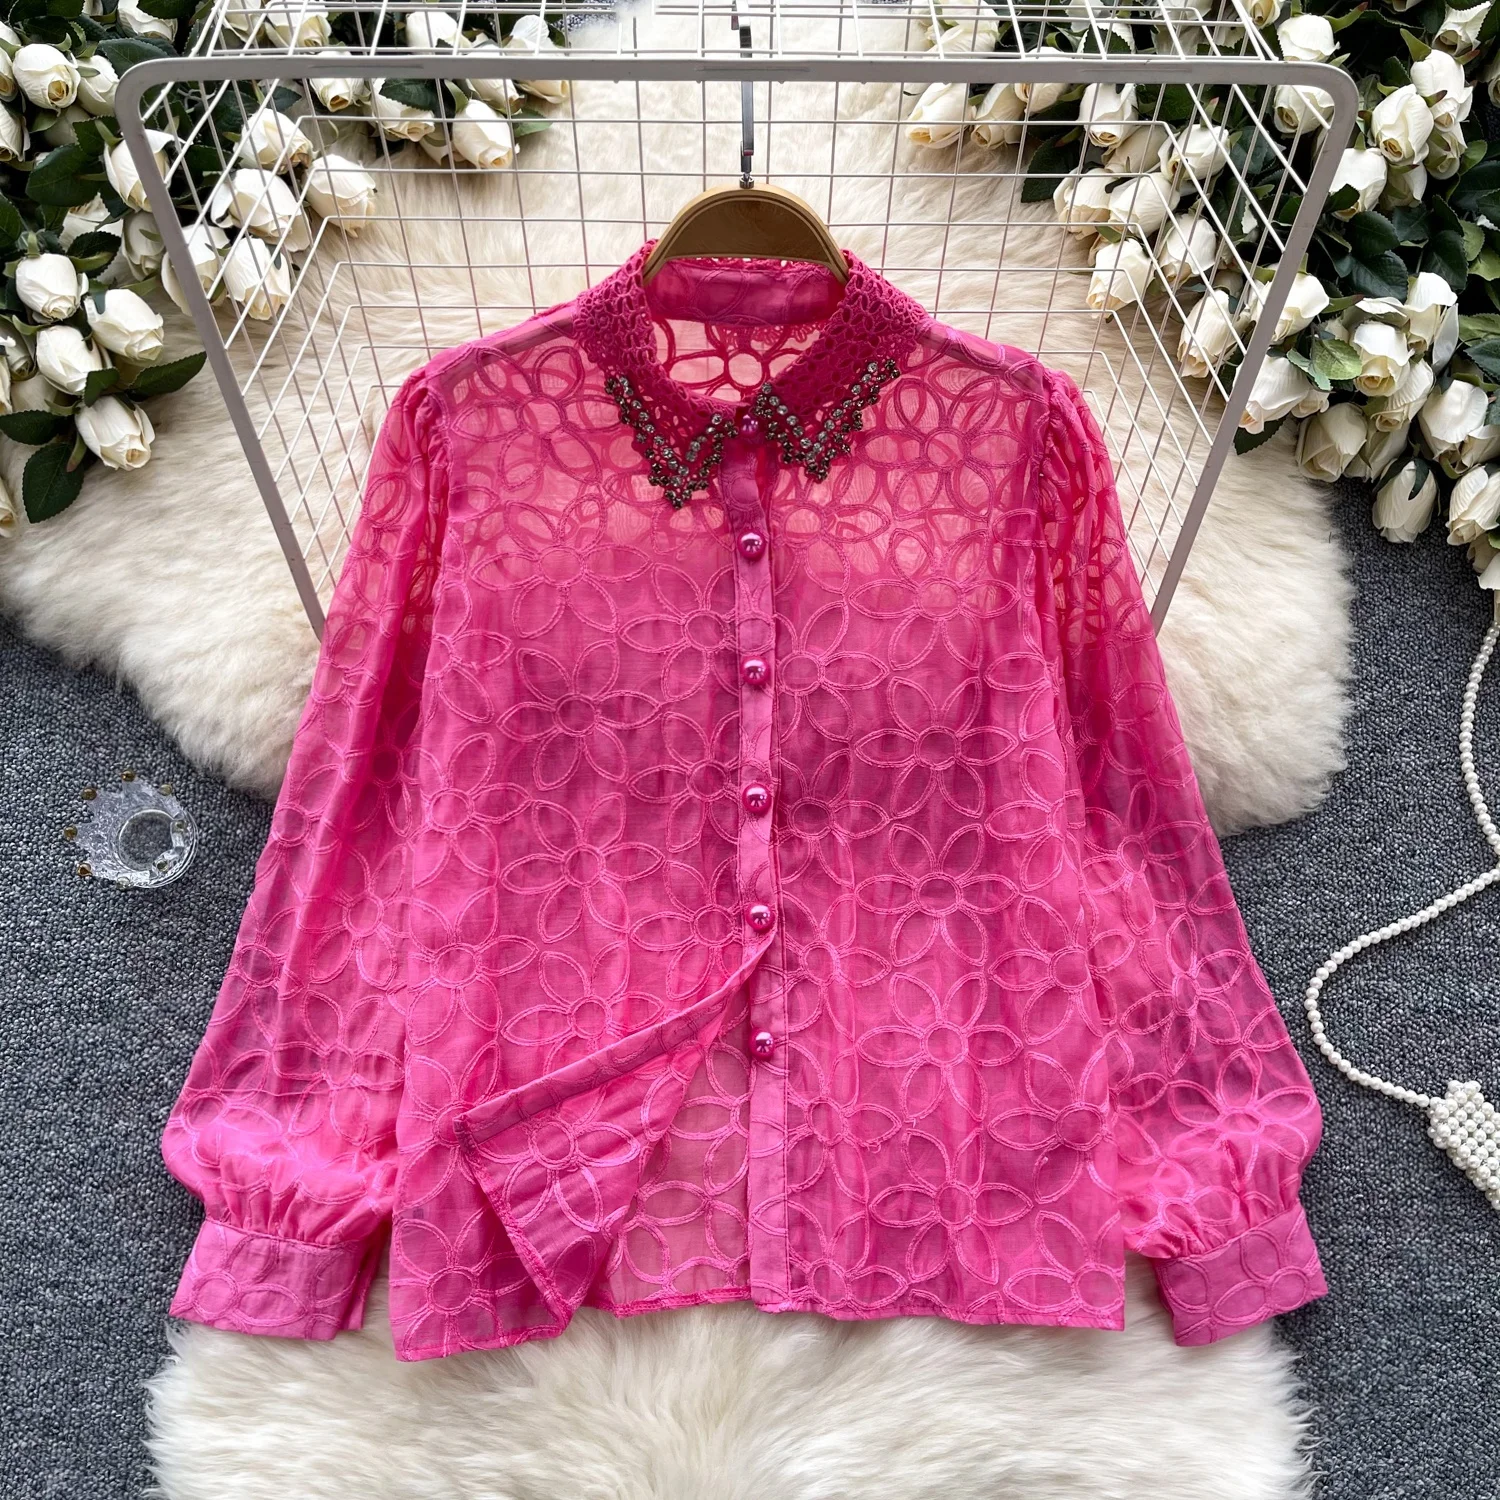 

Clothland Women Sweet Transparent Blouse Beading Pearl Collar Long Sleeve Shirt See Through Chic Tops Blusa LB136